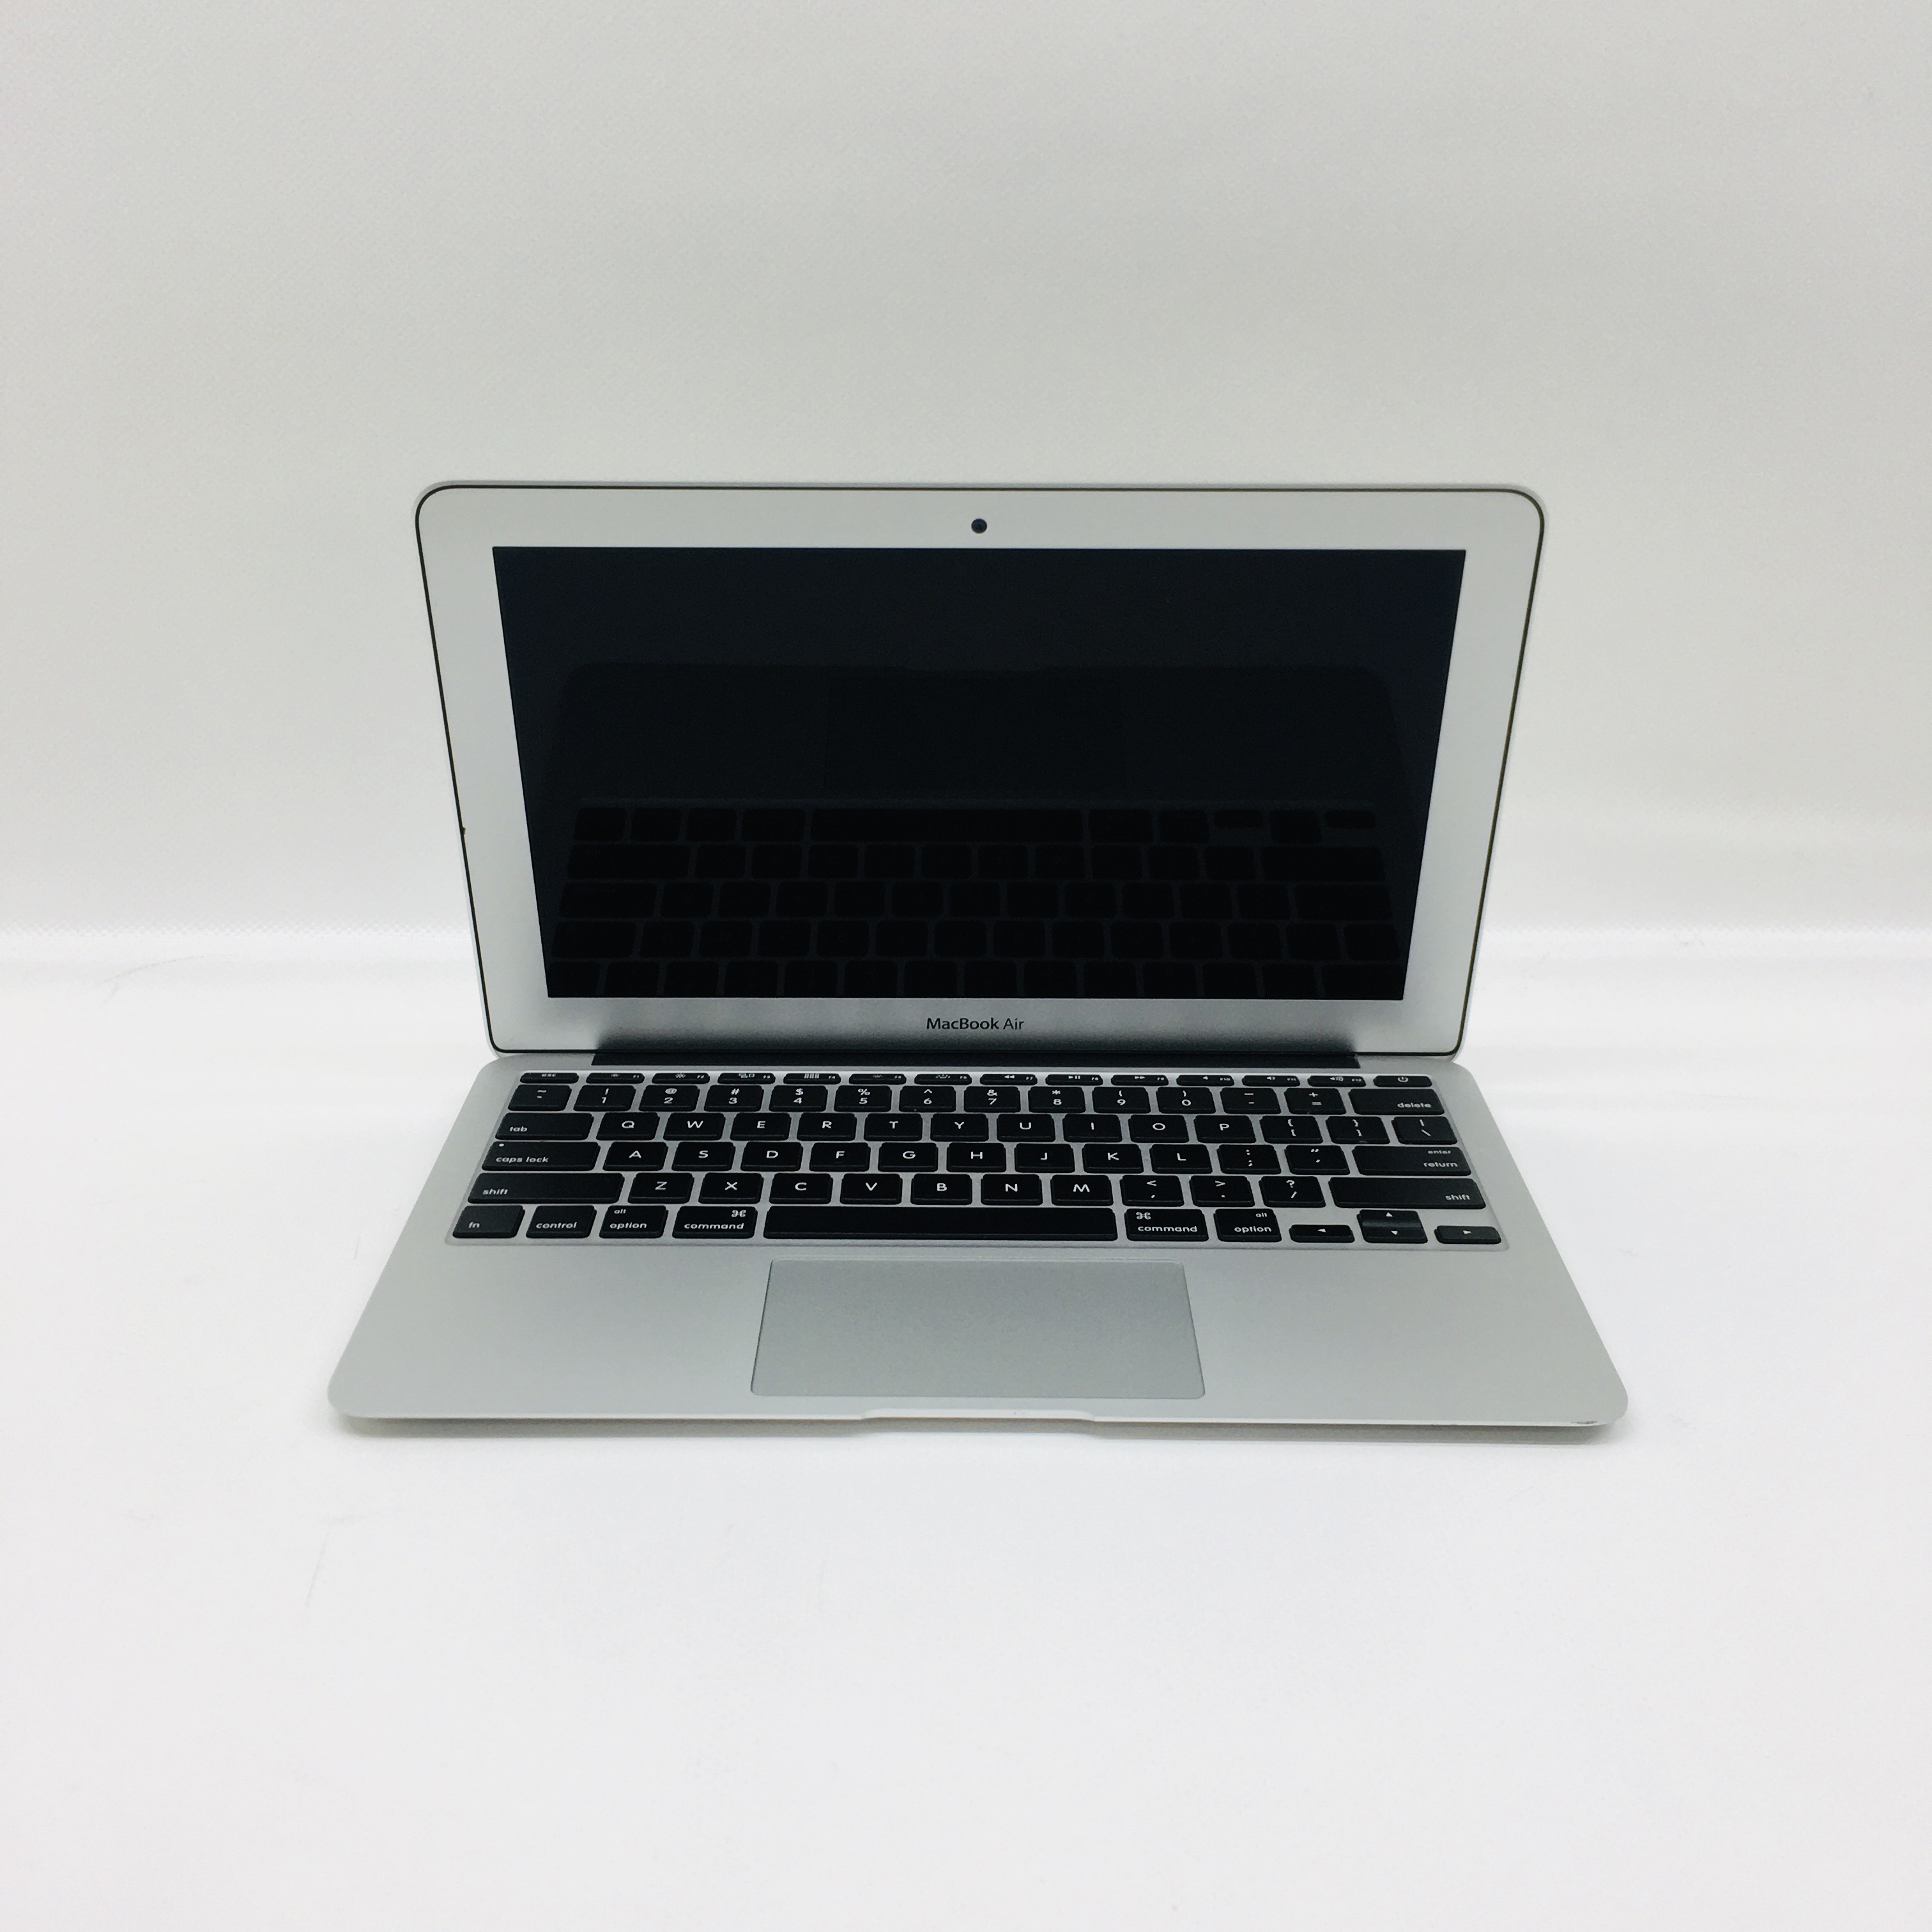 MacBook Air 11" Early 2015 (Intel Core i5 1.6 GHz 4 GB RAM 128 GB SSD), Intel Core i5 1.6 GHz, 4 GB RAM, 128 GB SSD, image 1